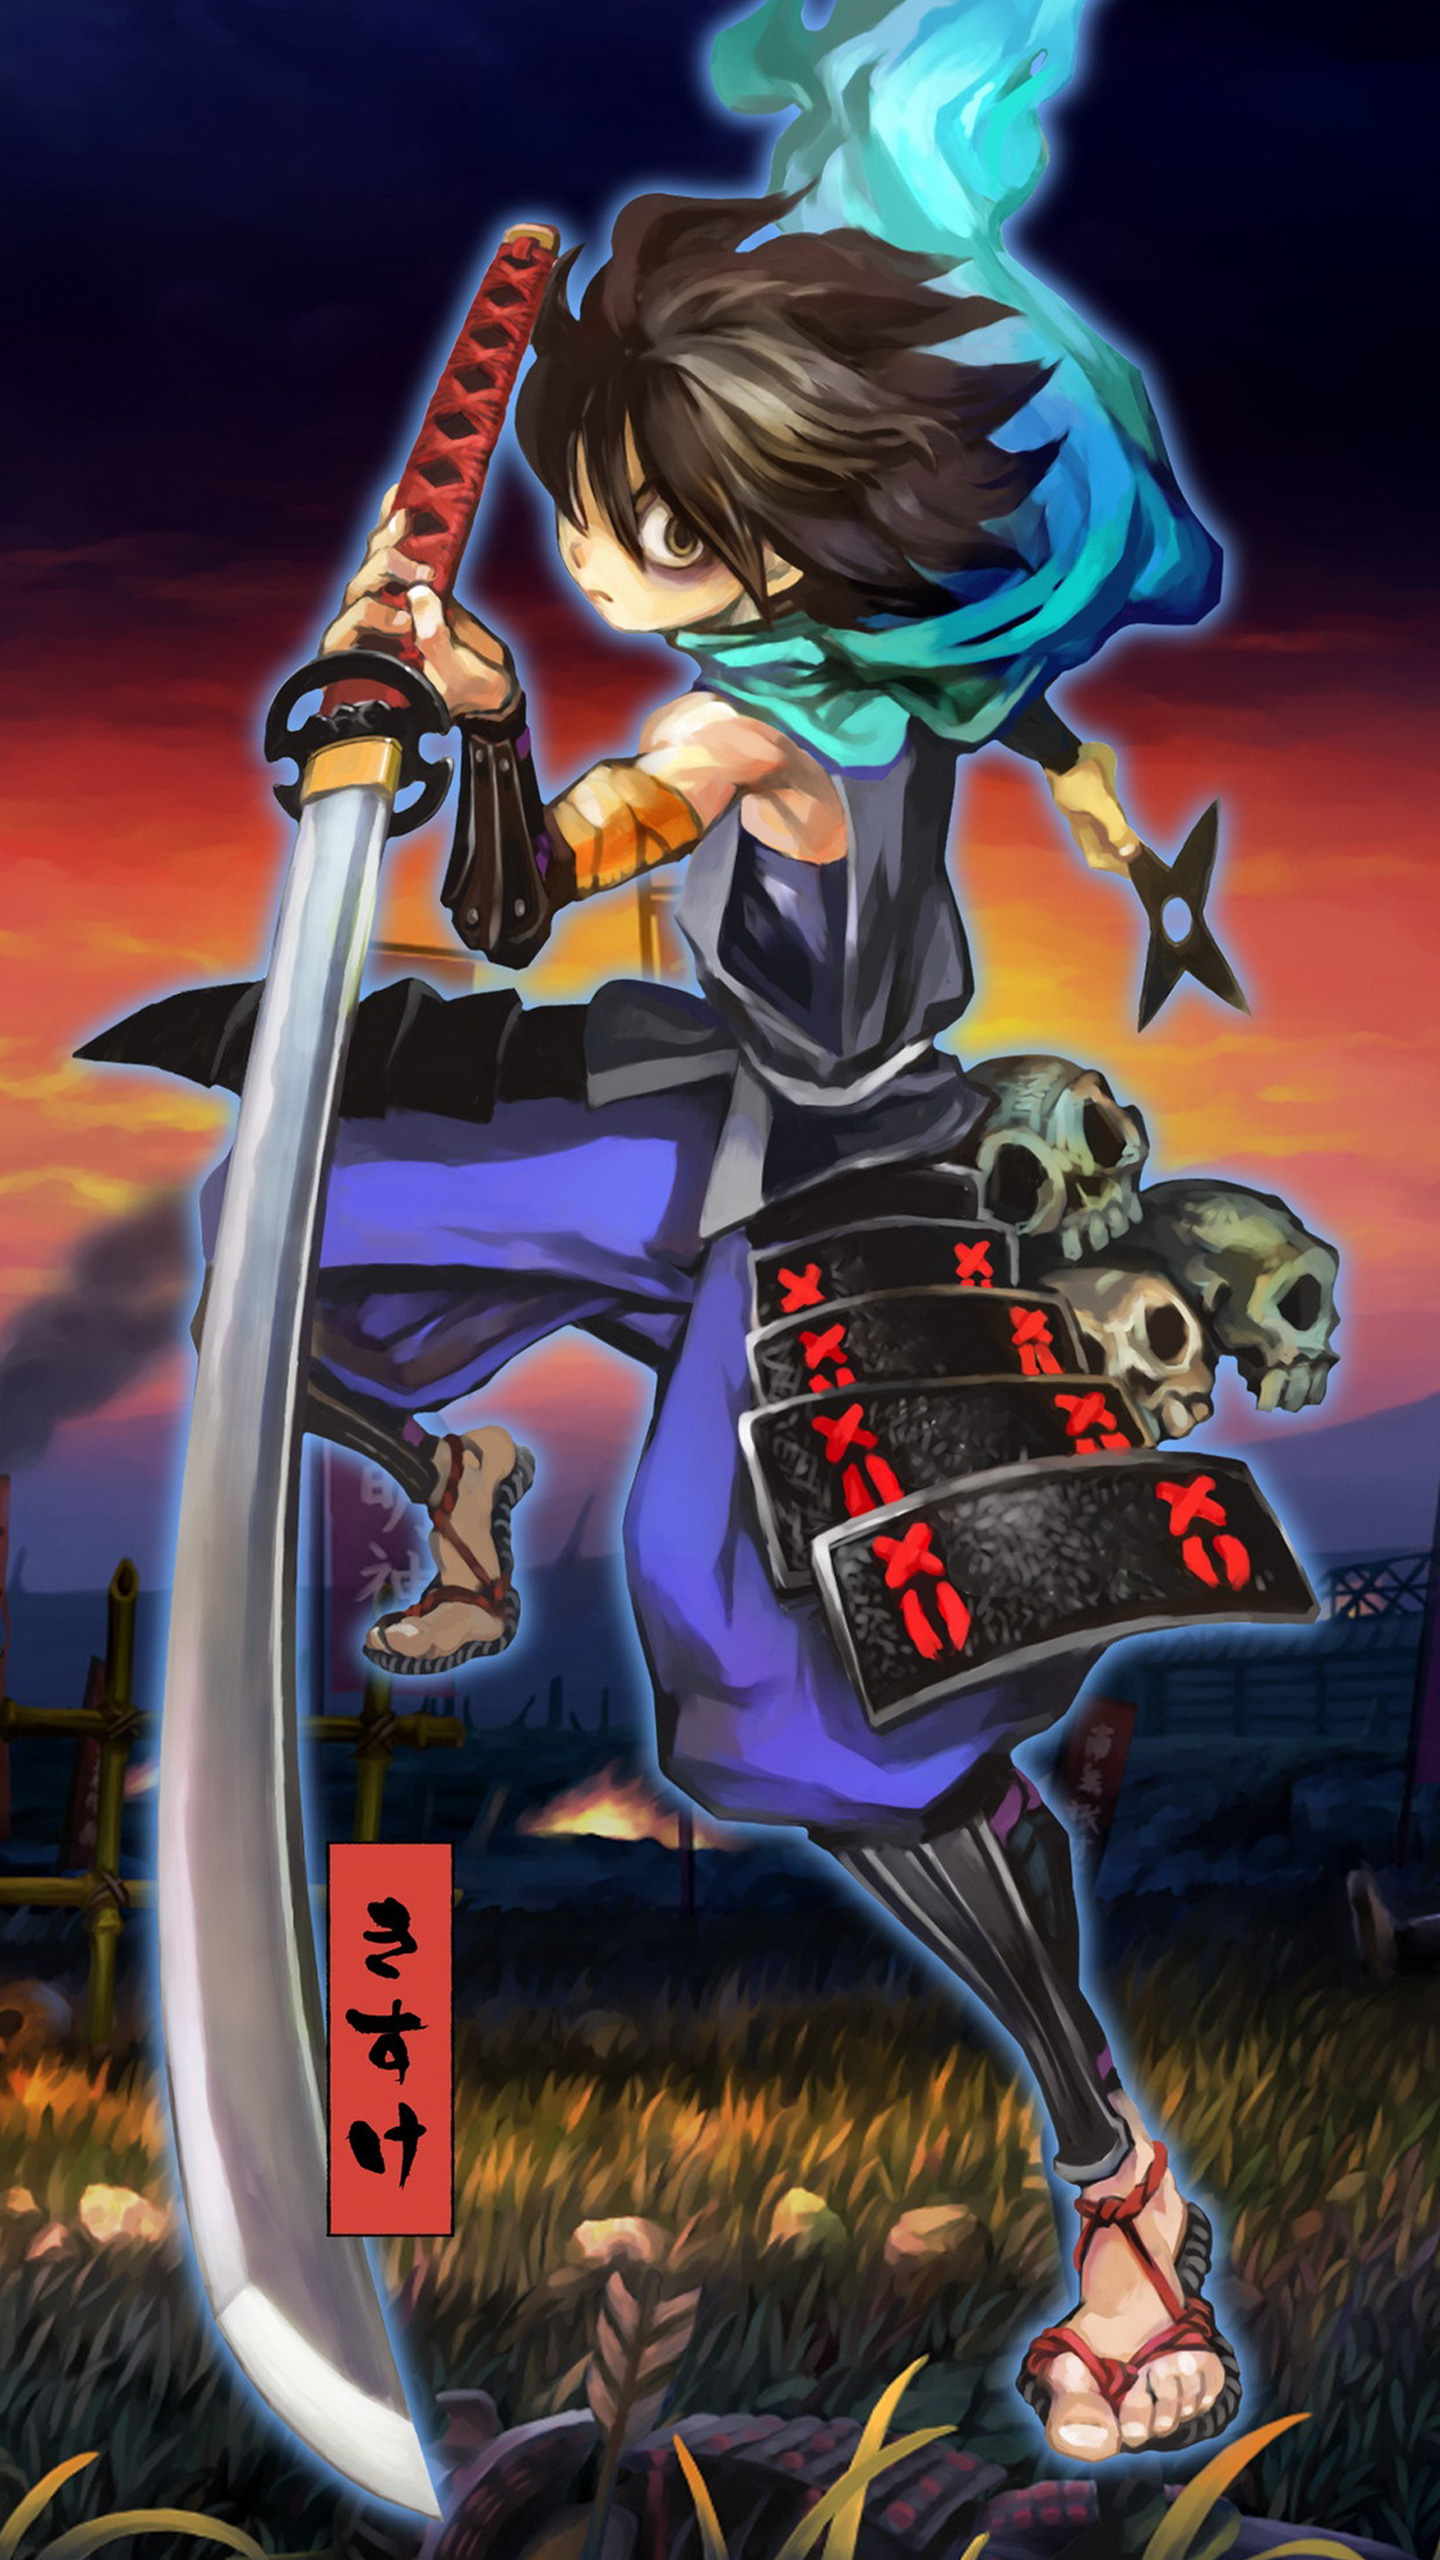 Awesome Forgotten Noughties Games - Muramasa: The Demon Blade